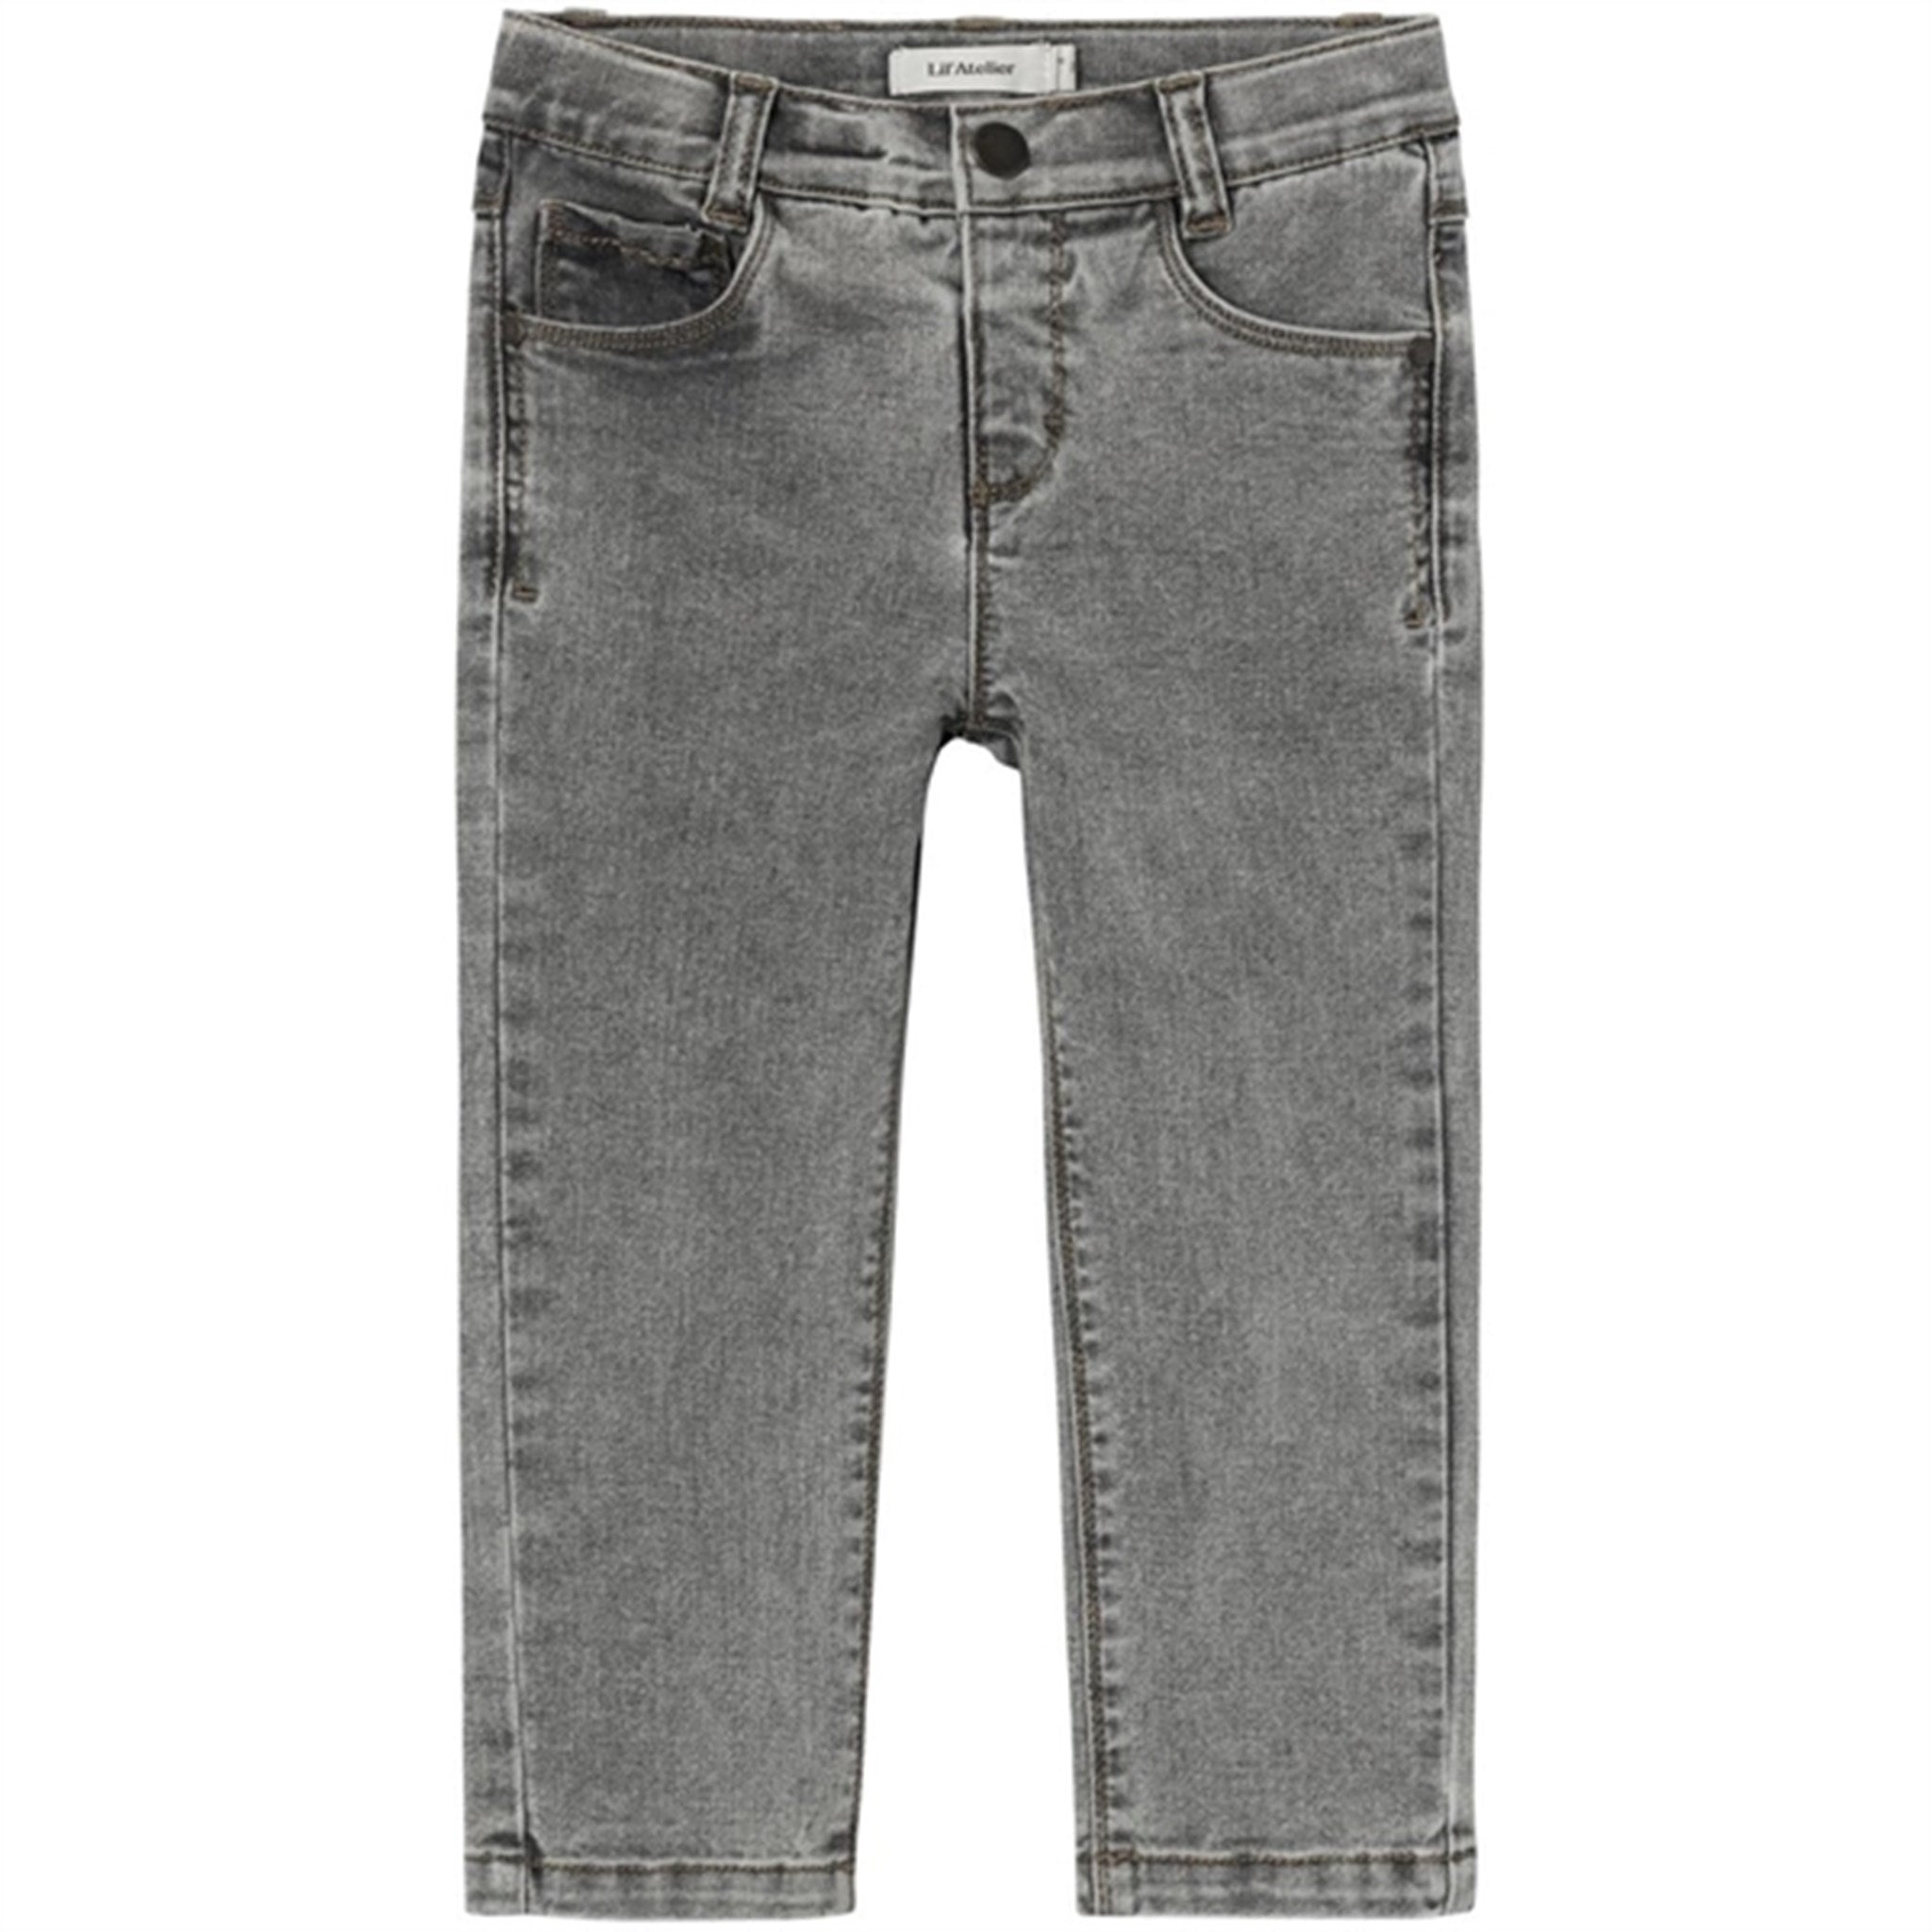 Lil'Atelier Light Grey Denim Ben Jeans